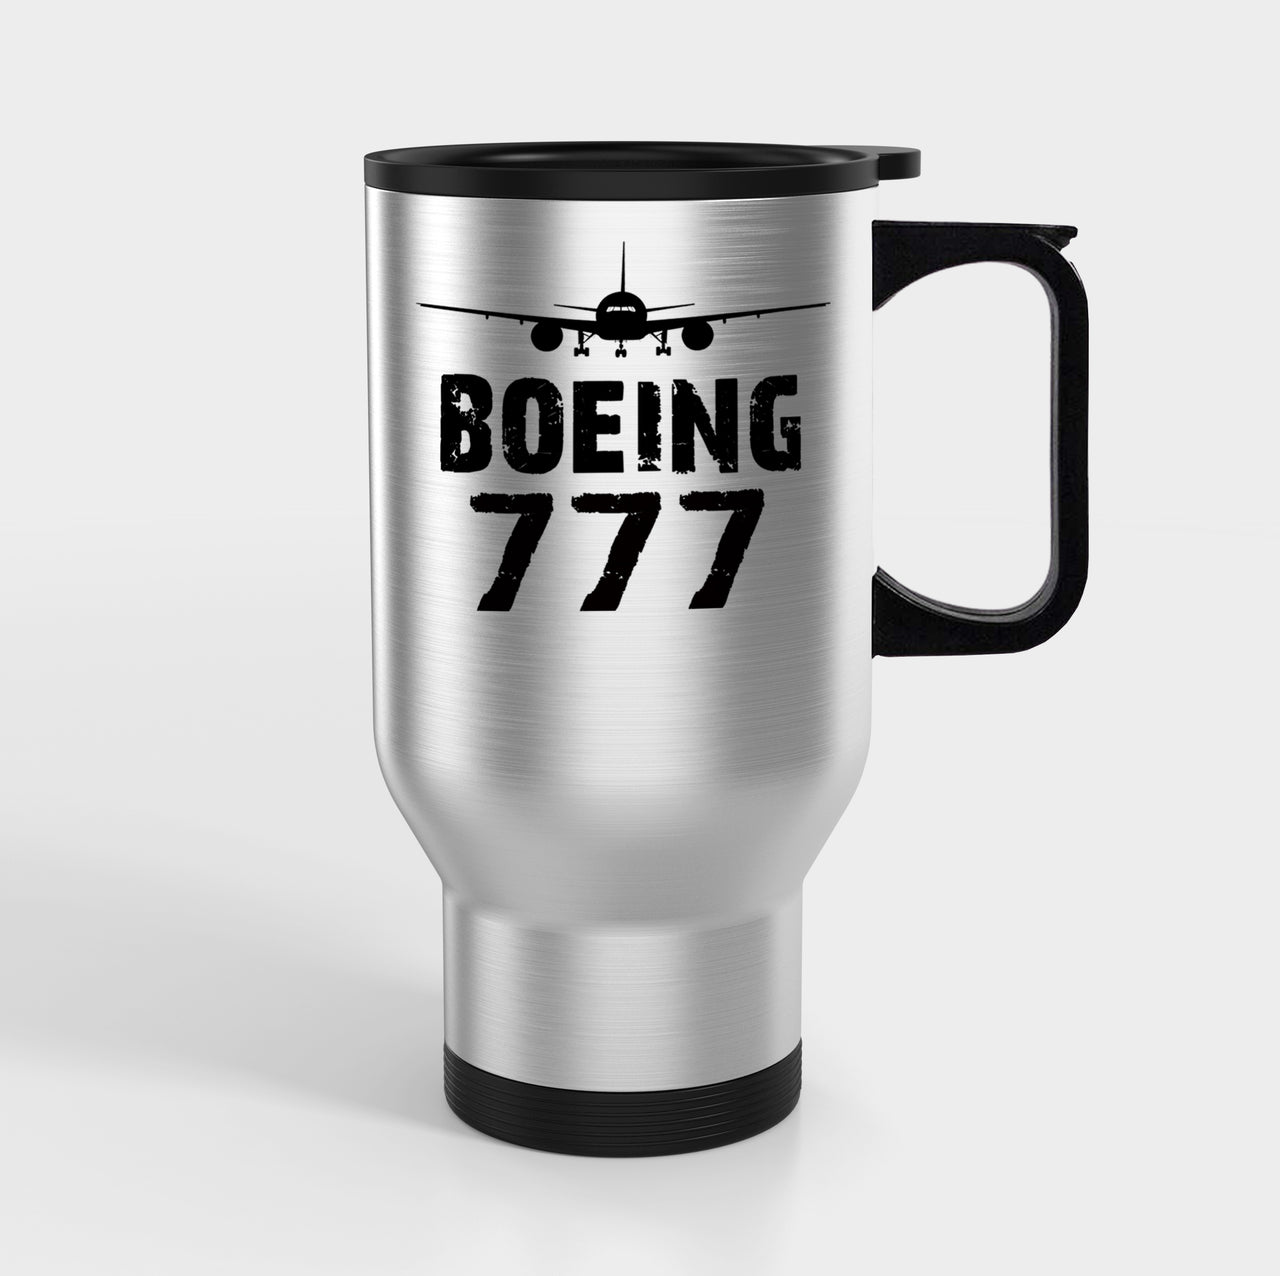 Boeing 777 & Plane Designed Travel Mugs (With Holder)